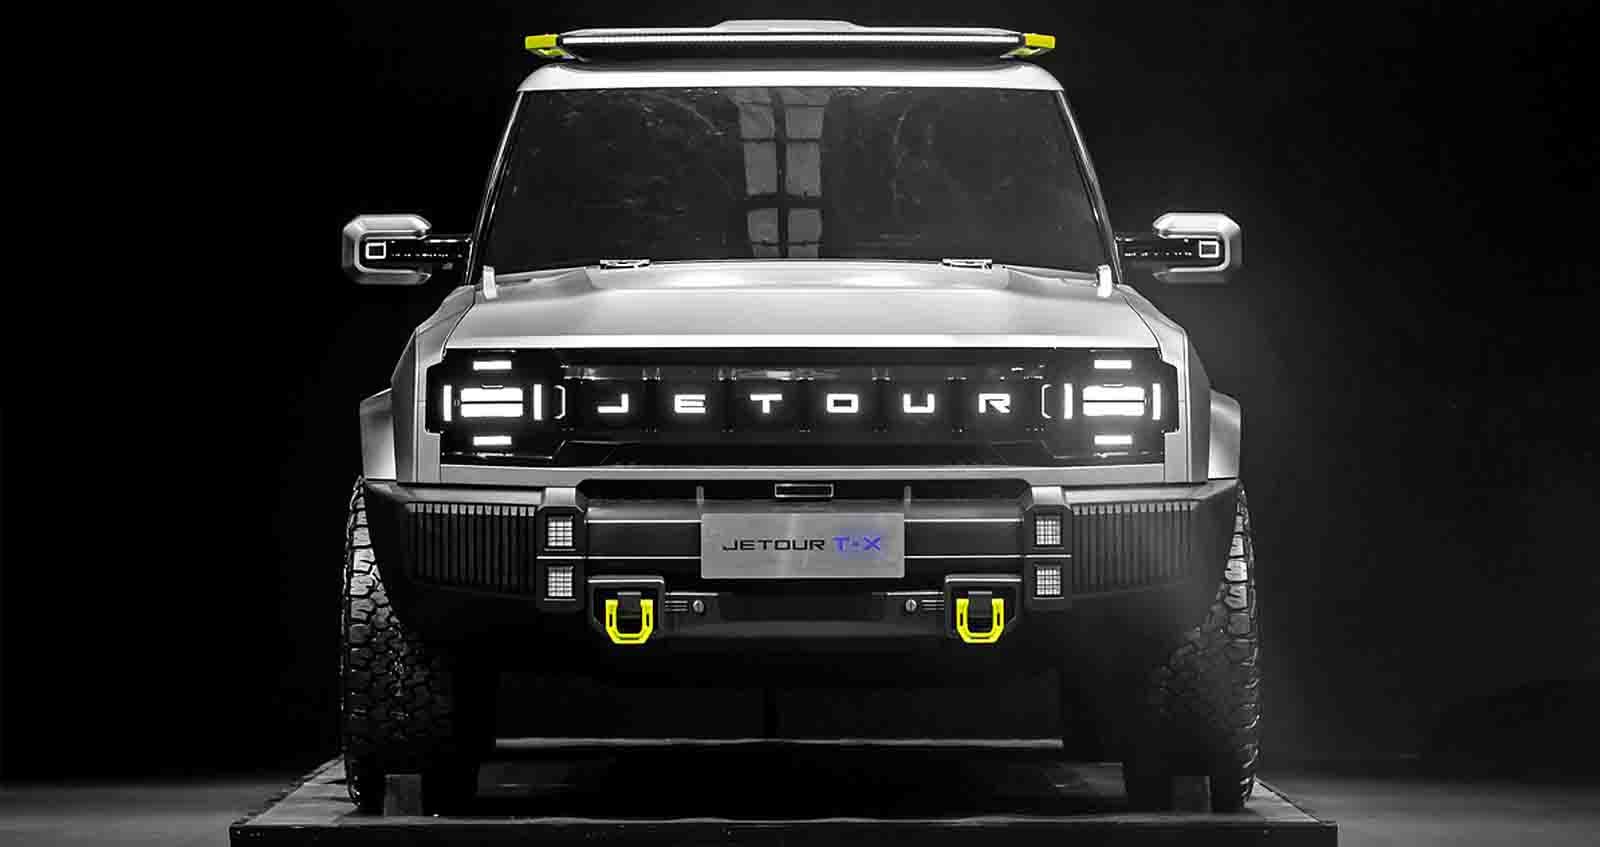 Jetour T-X Concept เอาใจสายออฟโรต พร้อมการออกแบบกลิ่นอาย  Land Rover Defender